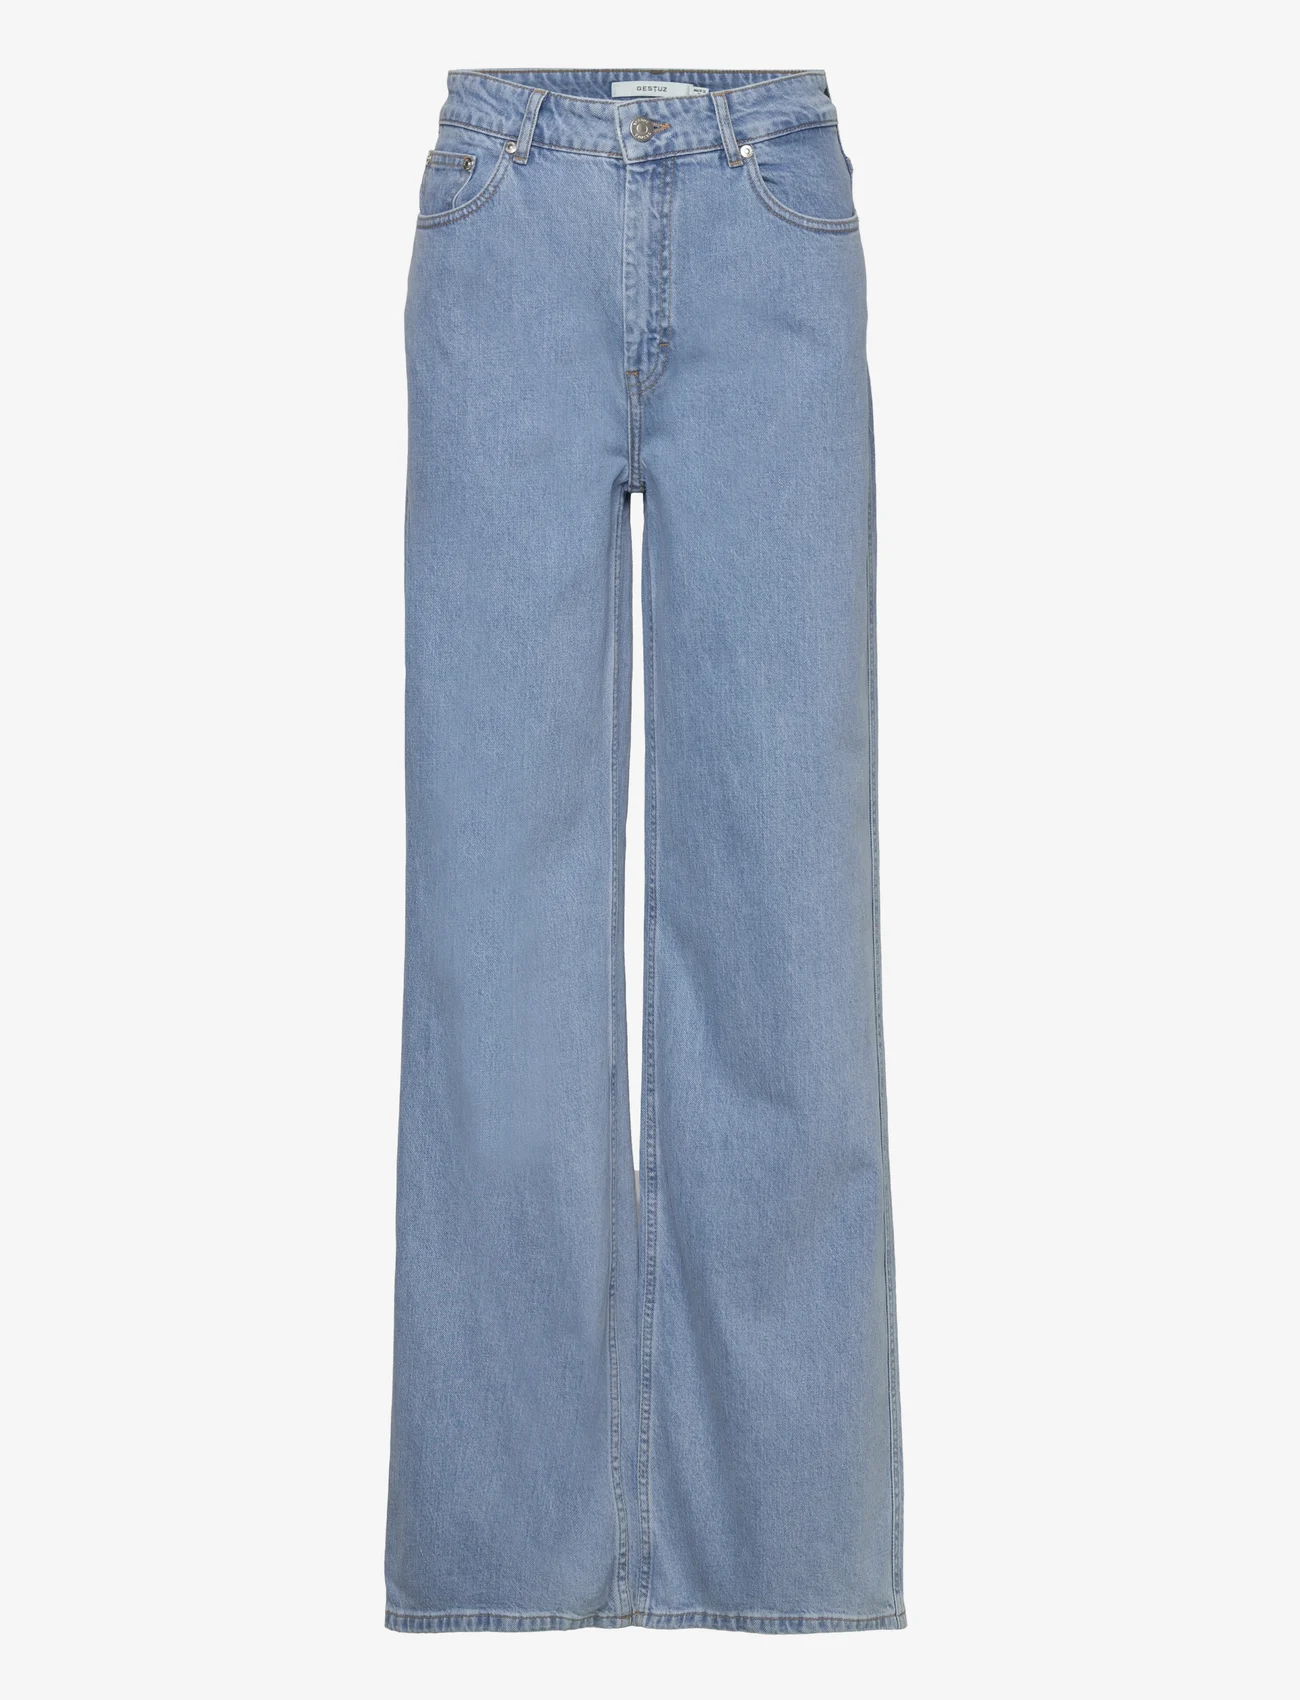 Gestuz - AuraGZ HW wide jeans NOOS - leveälahkeiset farkut - mid blue washed - 0